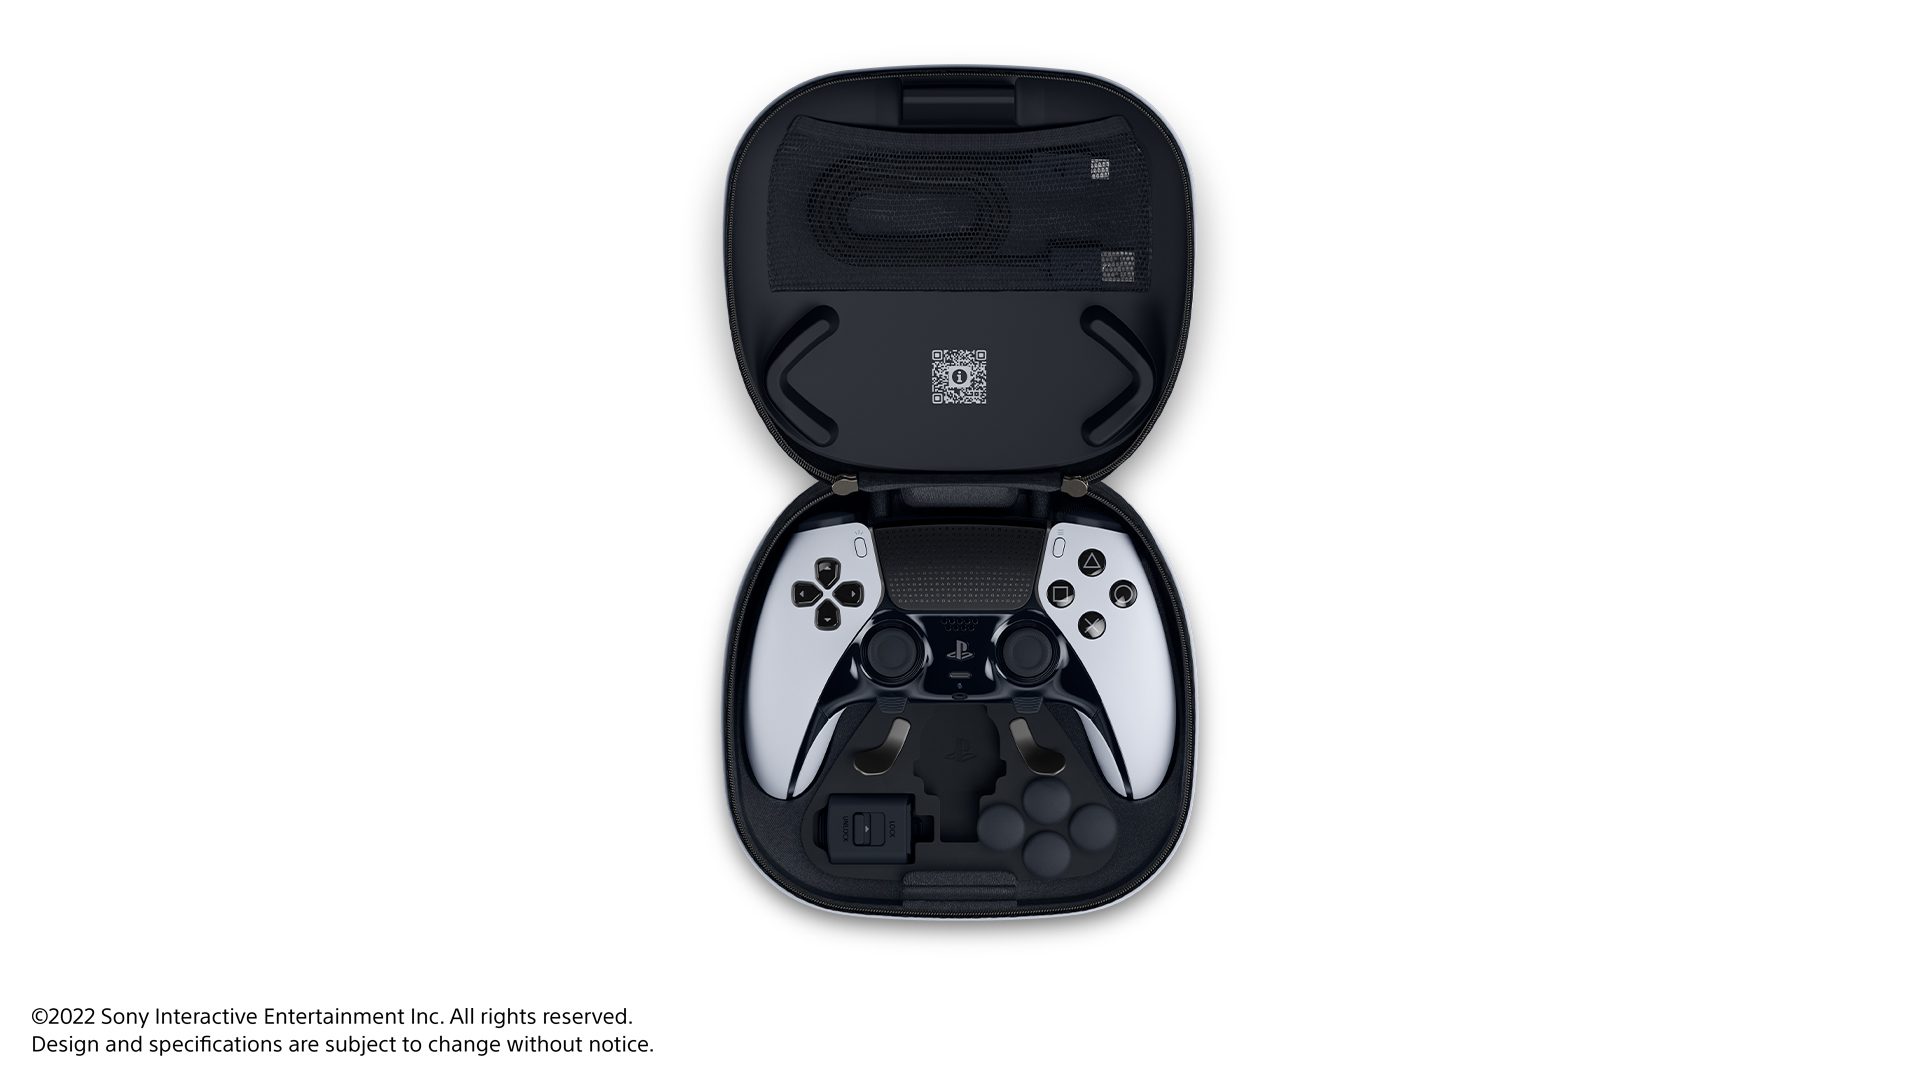 DualSense Edge PS5 Controller Announced at Gamescom — Forever